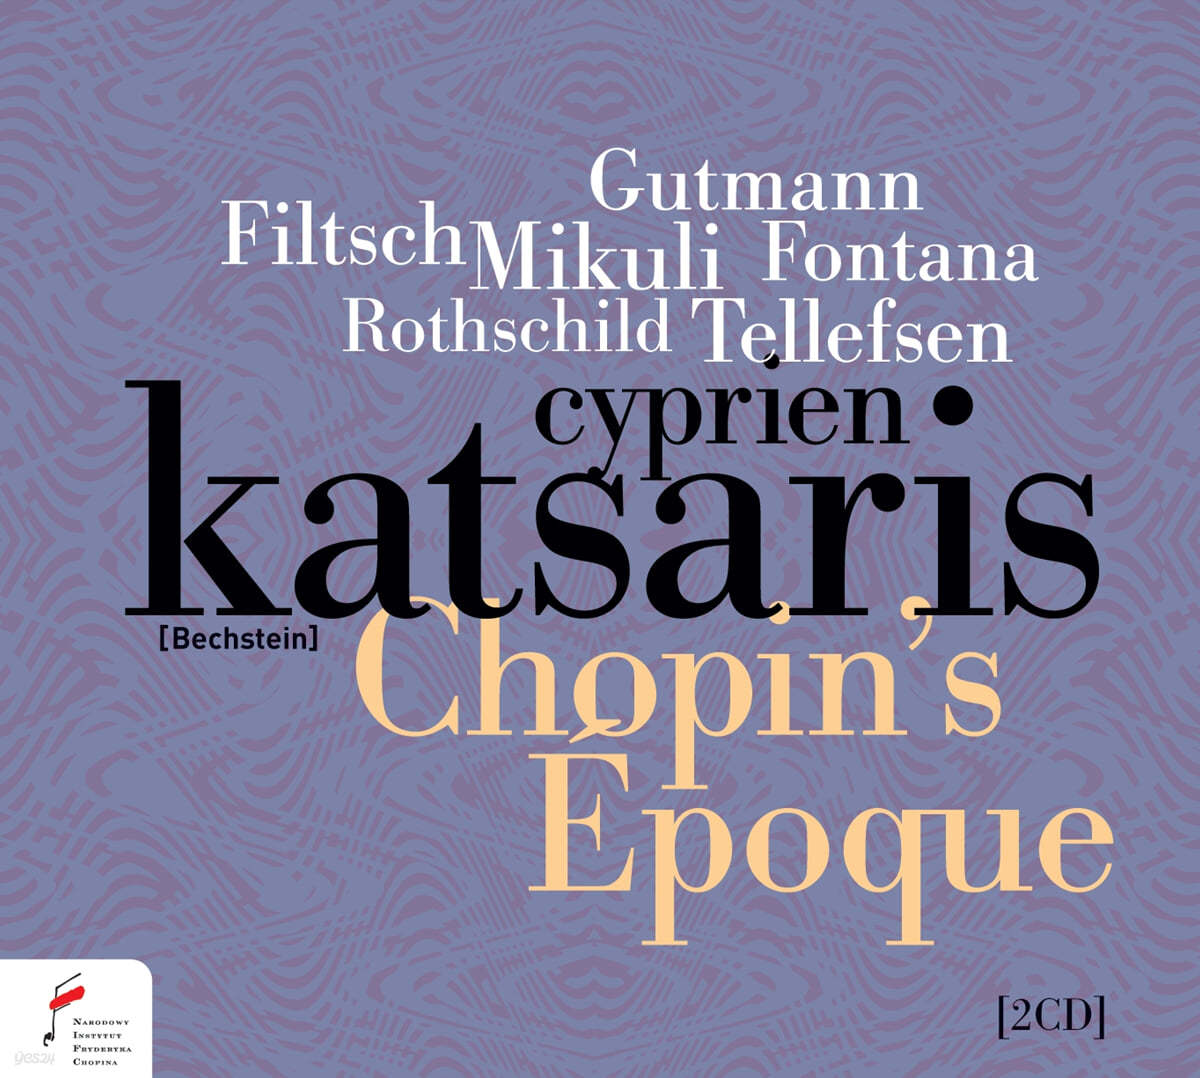 Cyprien Katsaris 쇼팽의 시대 - 구트만, 미쿨리, 폰타나, 필치, 로스차일드, 텔프젠의 피아노 음악 (Chopin's Epoque - Gutmann, Filtsch, Mikuli, Fontana, Rothschild, Tellefsen)